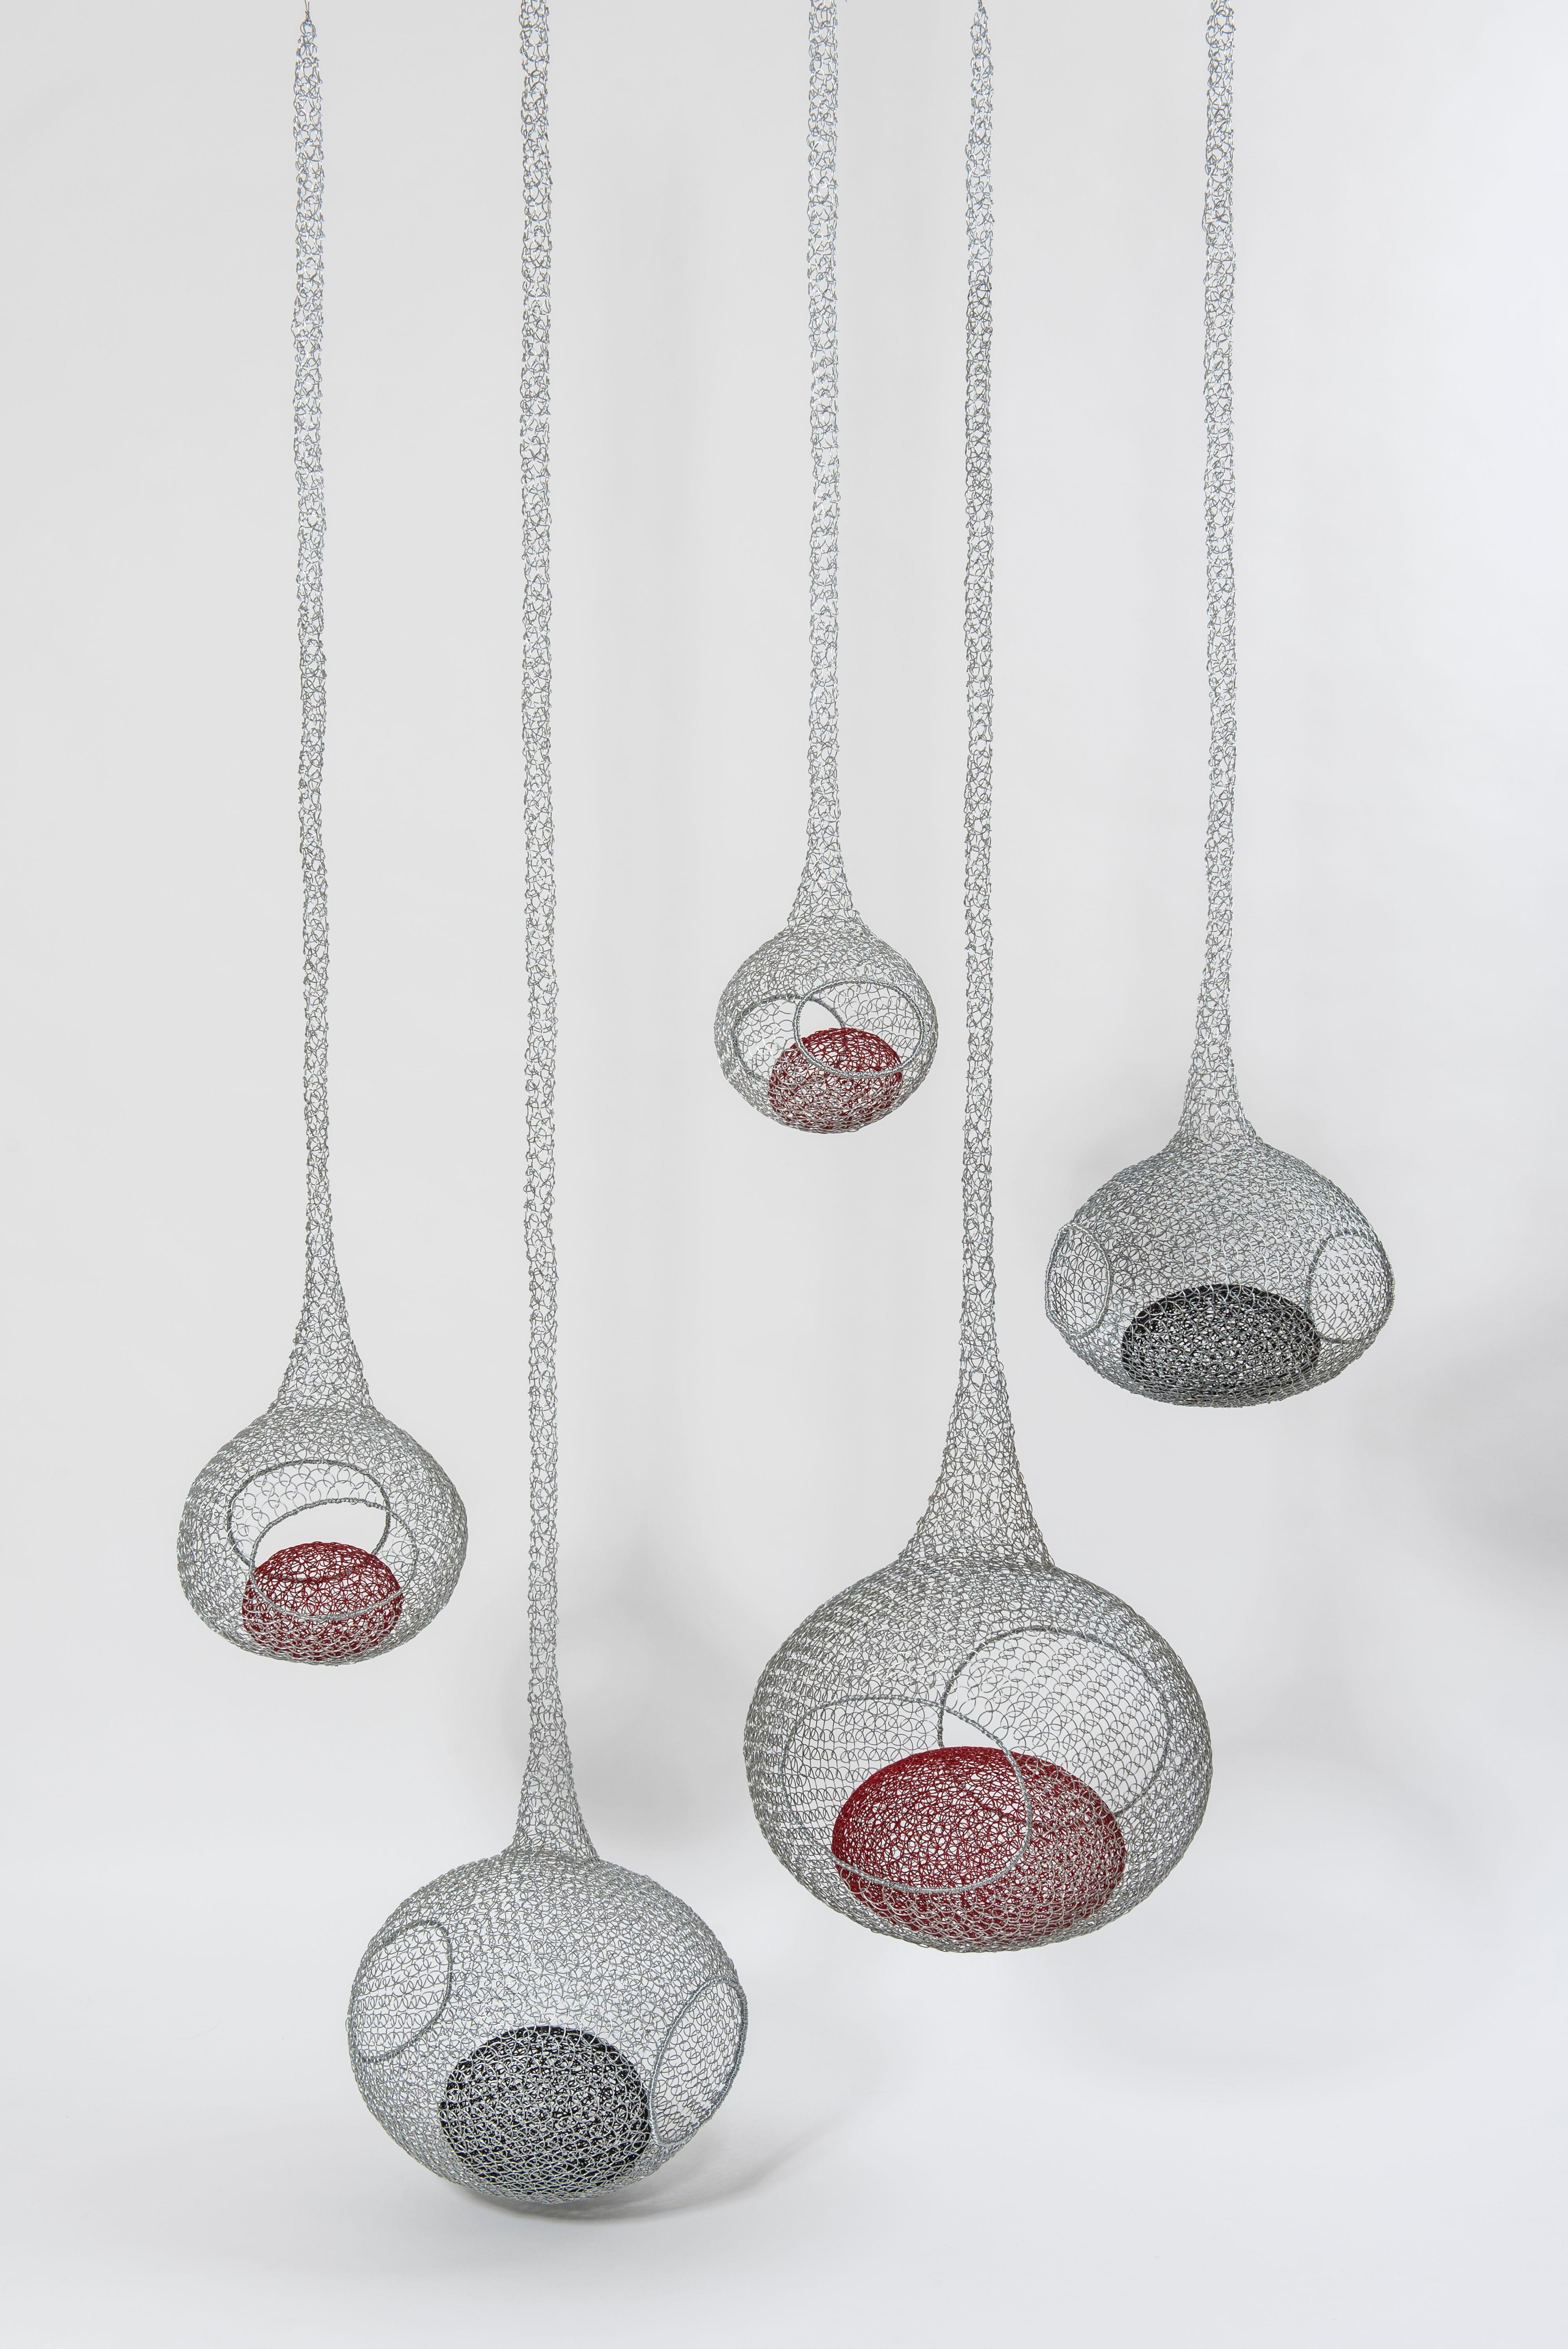 Delphine Grandvaux Abstract Sculpture - "Ove", Multi-Parts Hand Knitted Metallic Mesh Transparent Airy Pendant Sculpture